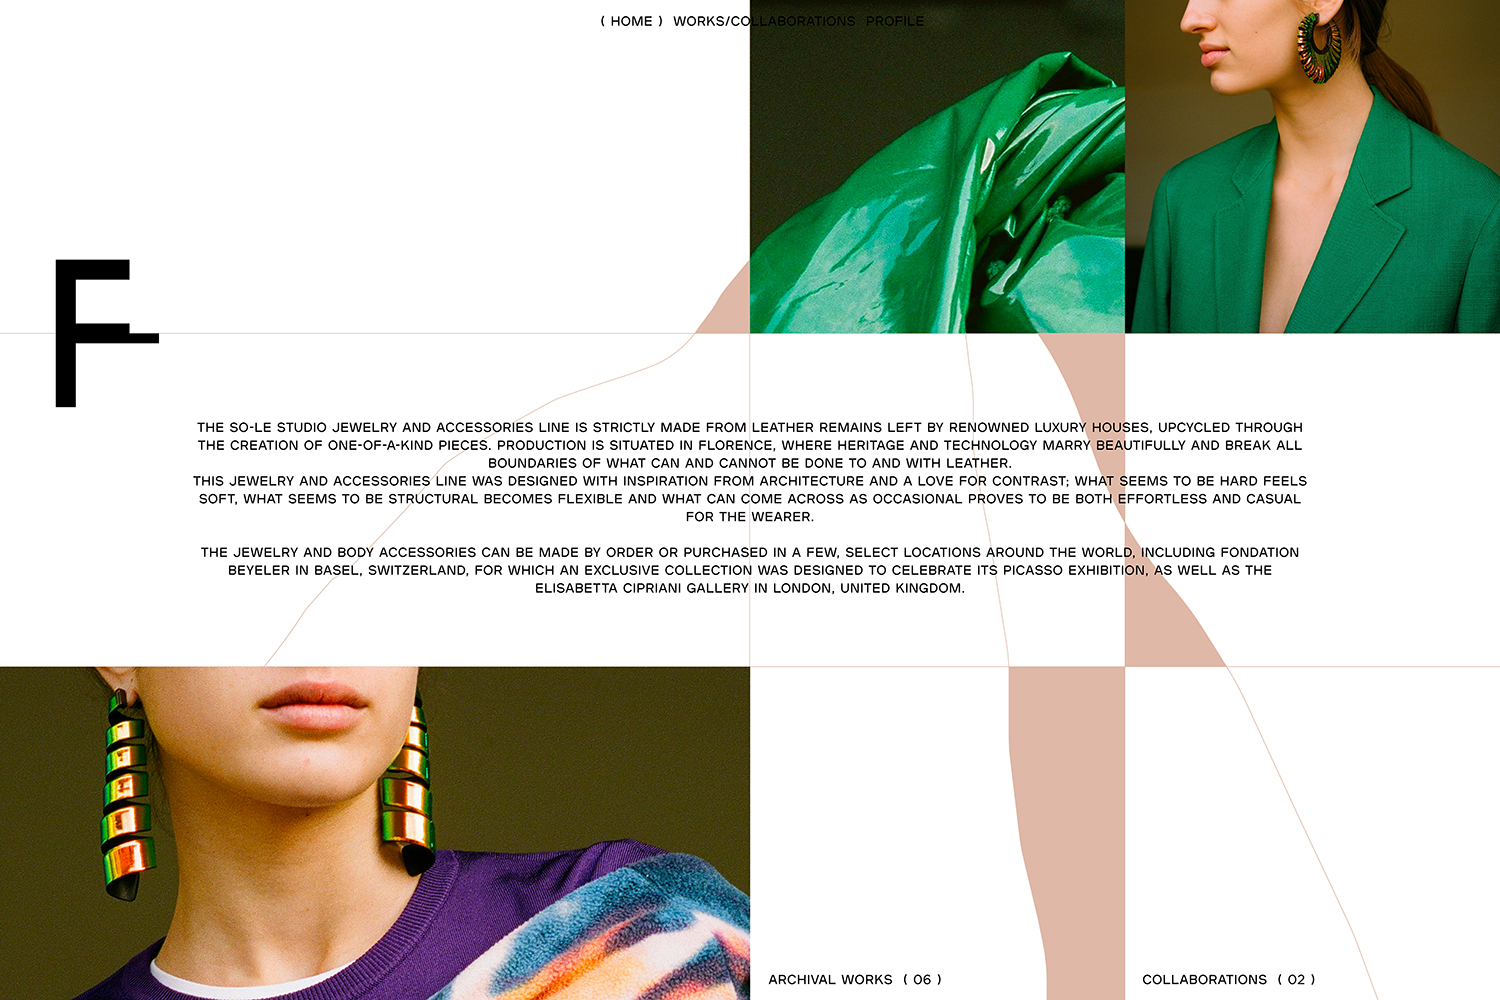 New logotype and visual identity by Swedish design studio Lundgren+Lindqvist for fashion designer Maria Sole Ferragam